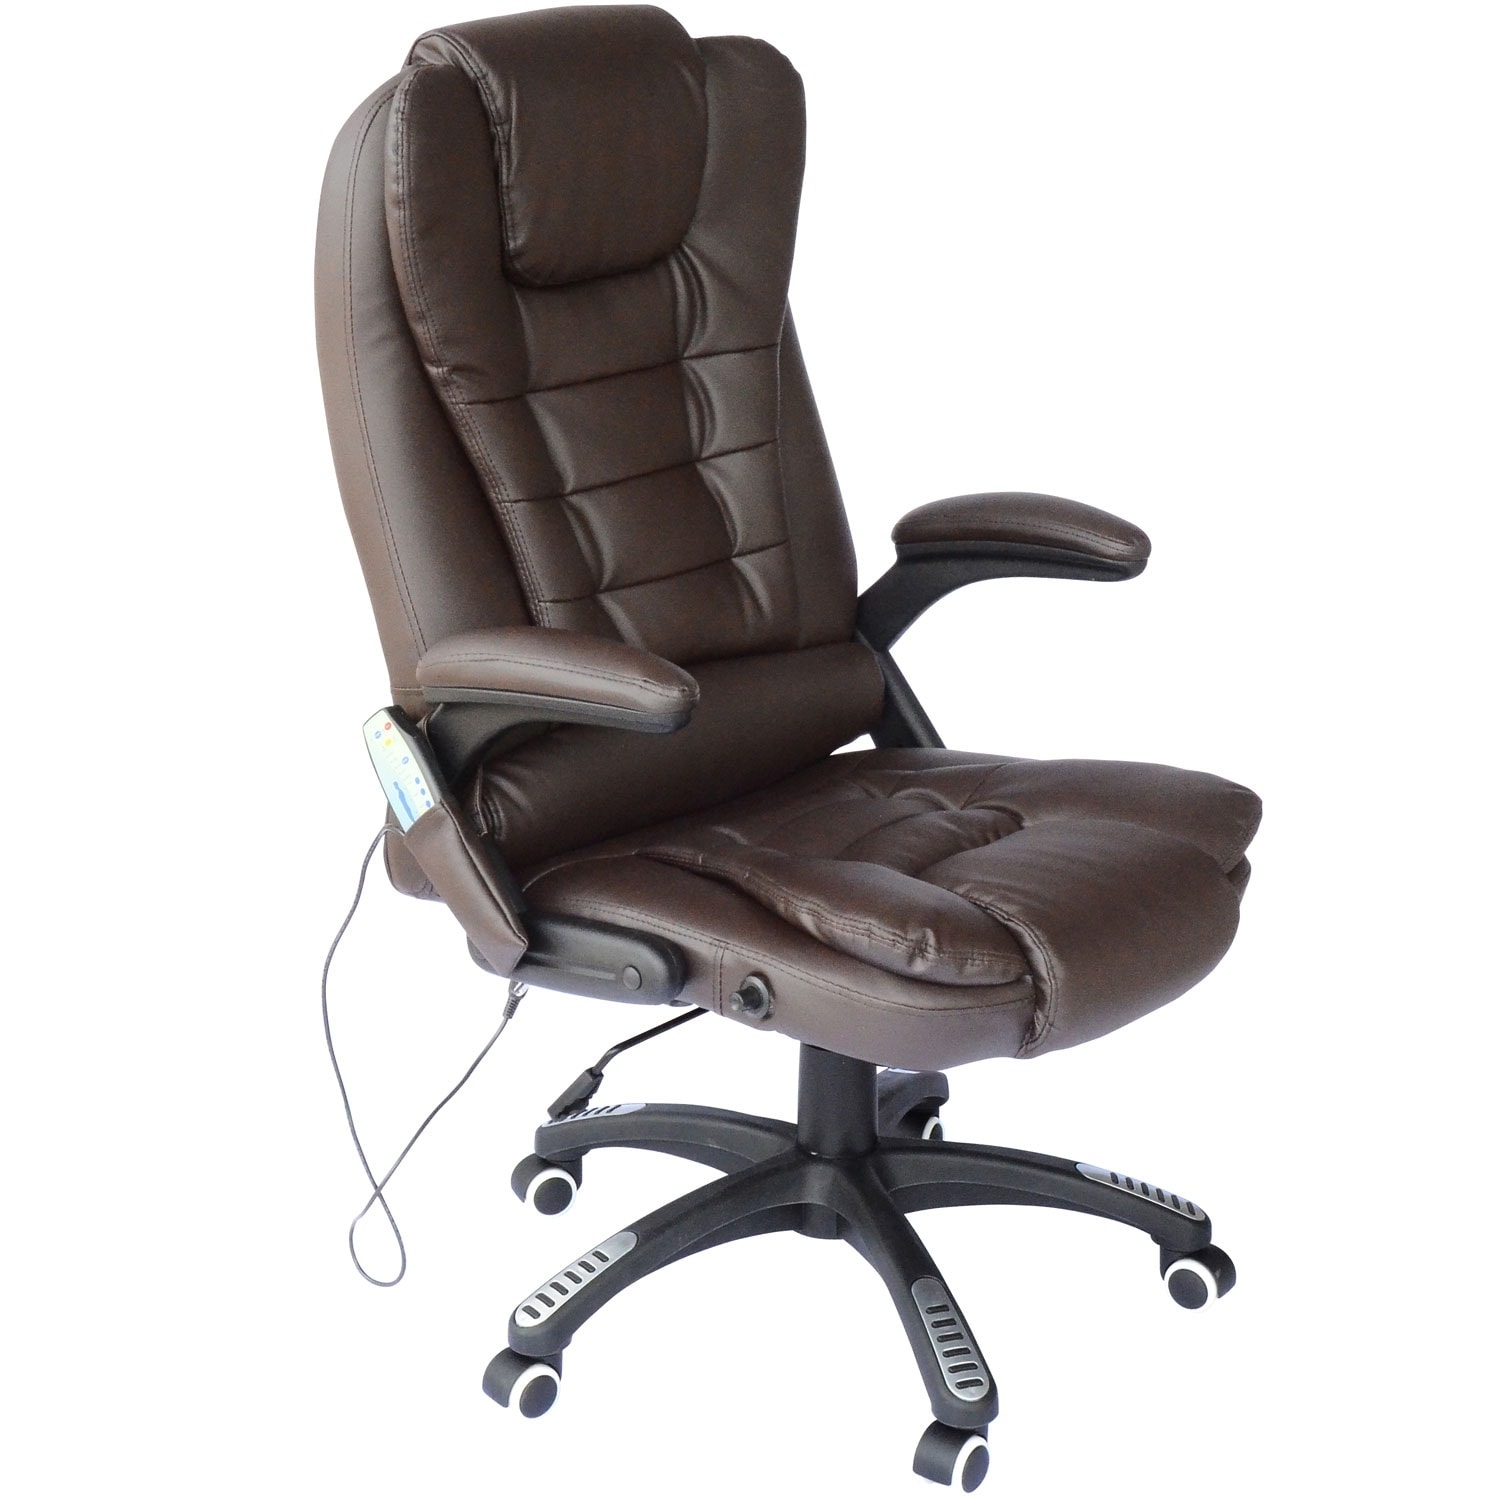 Homcom Executive Ergonomic Heated Vibrating Massage Office Chair Brown On Sale Overstock 18088215